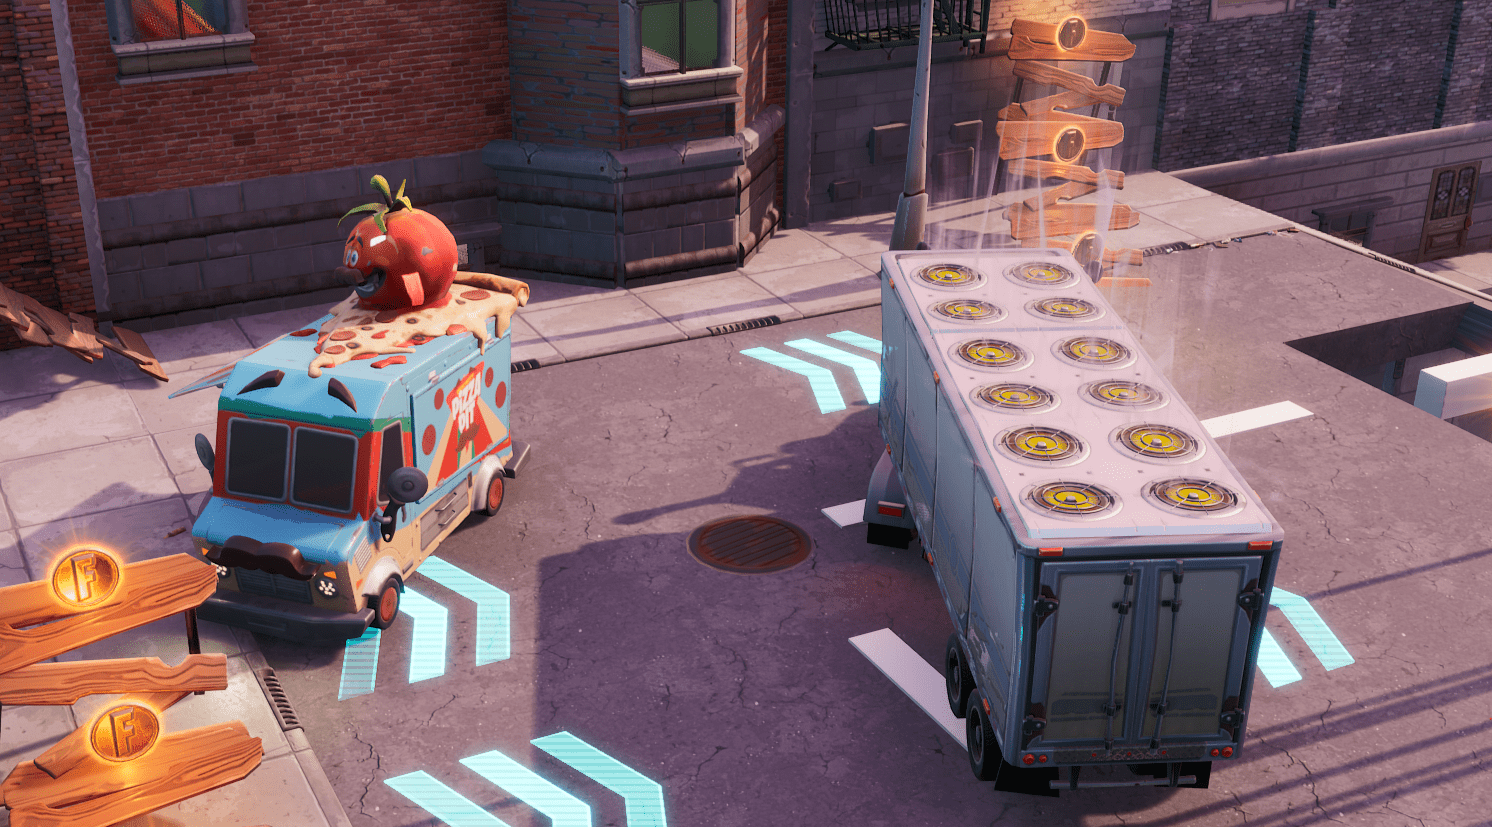 Fortnite Downtown Drop Challenge - Dance or Emote Between Two Food Trucks